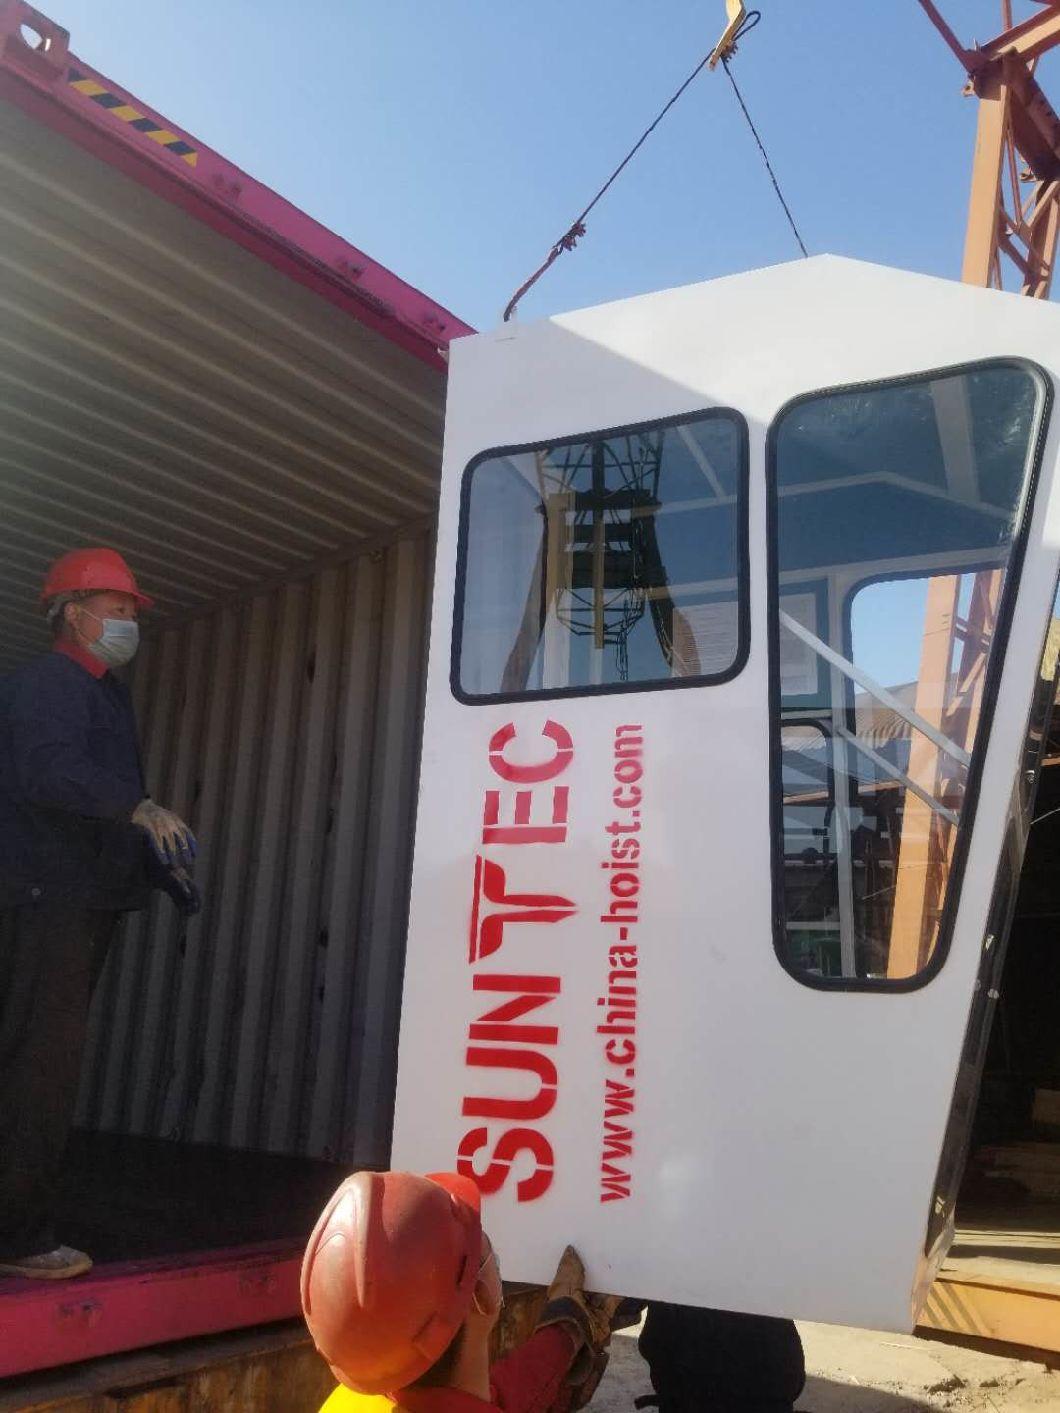 Suntec Self-Supporting Tower Crane Building Construction Crane Qtz80 8 Tons